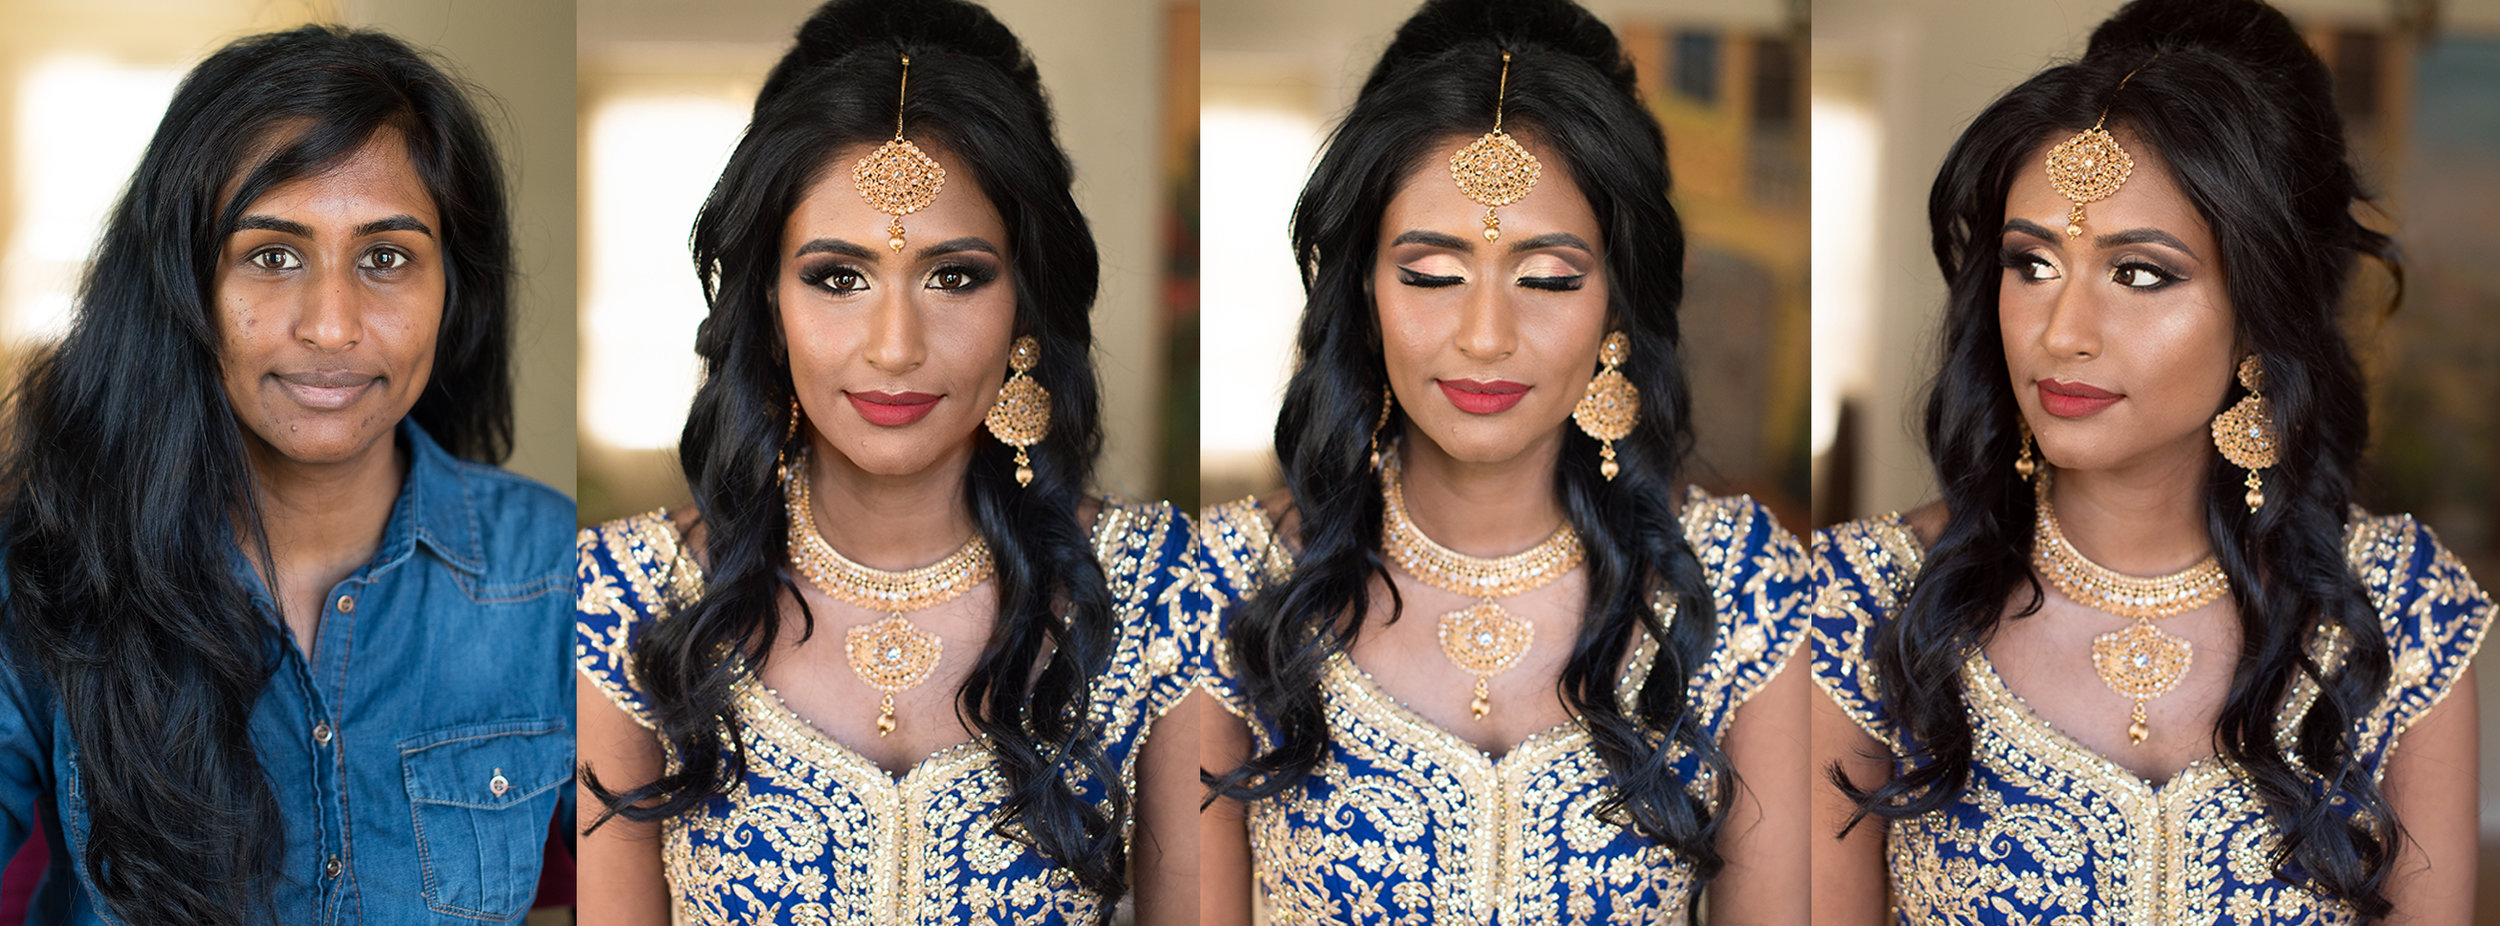 South Asian bride indian Bridal blue red gold wedding Beauty Affair .jpg